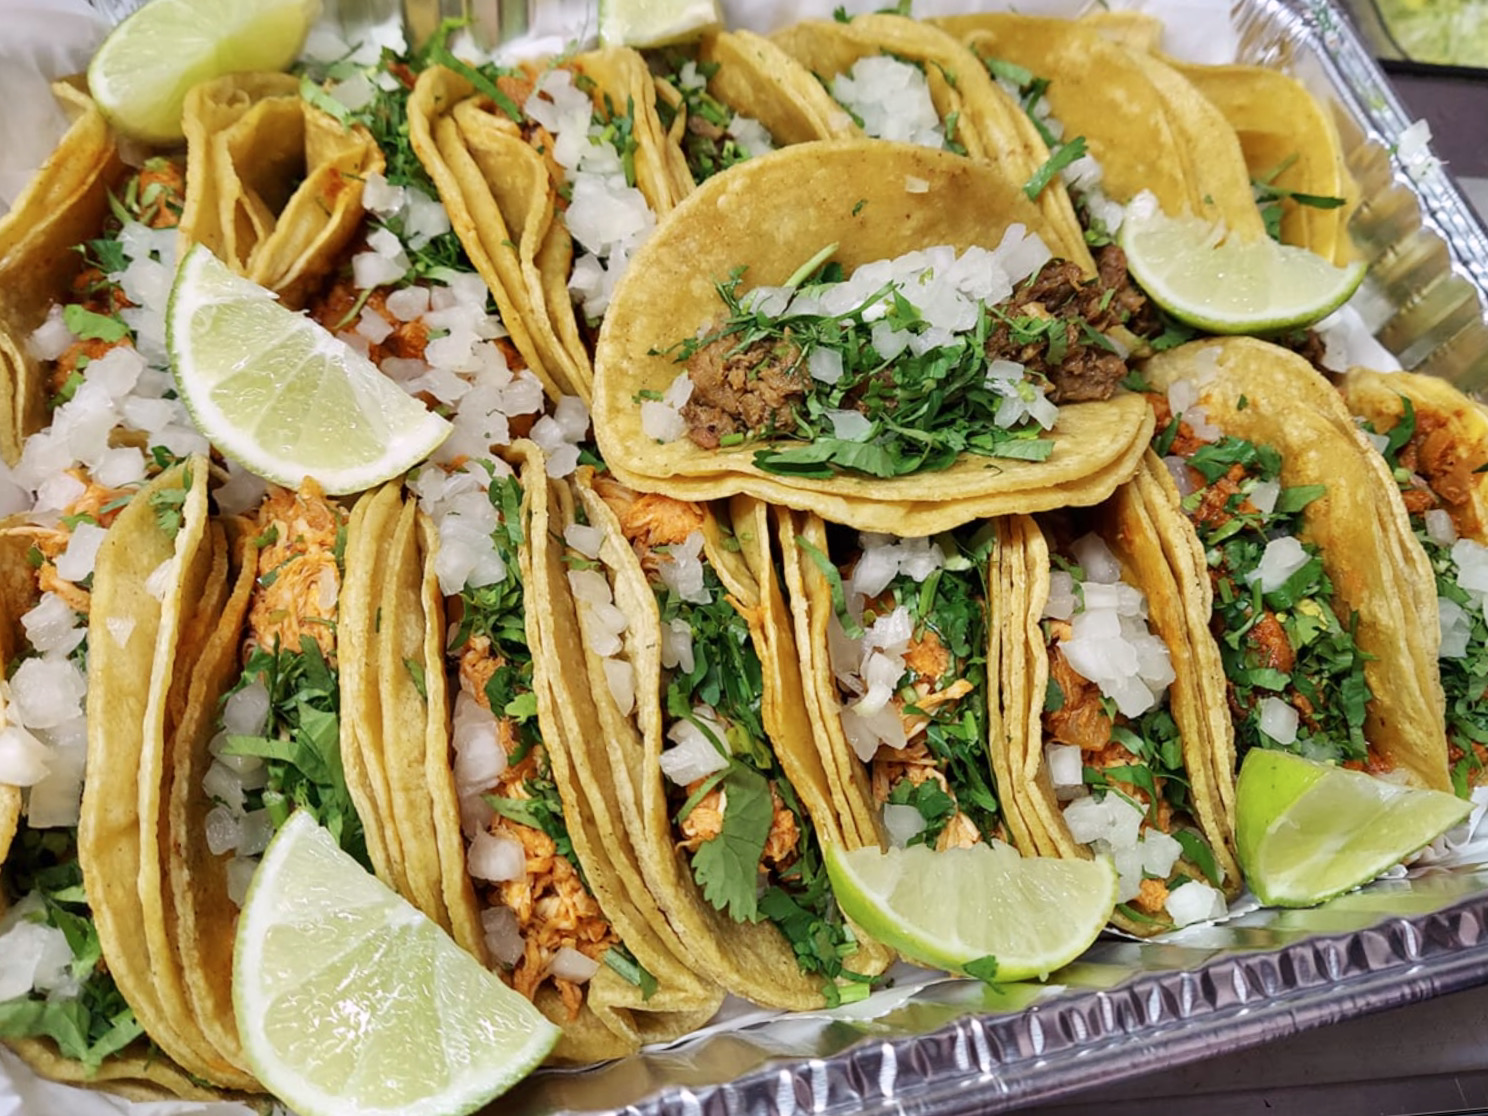 Ventura's Tacos